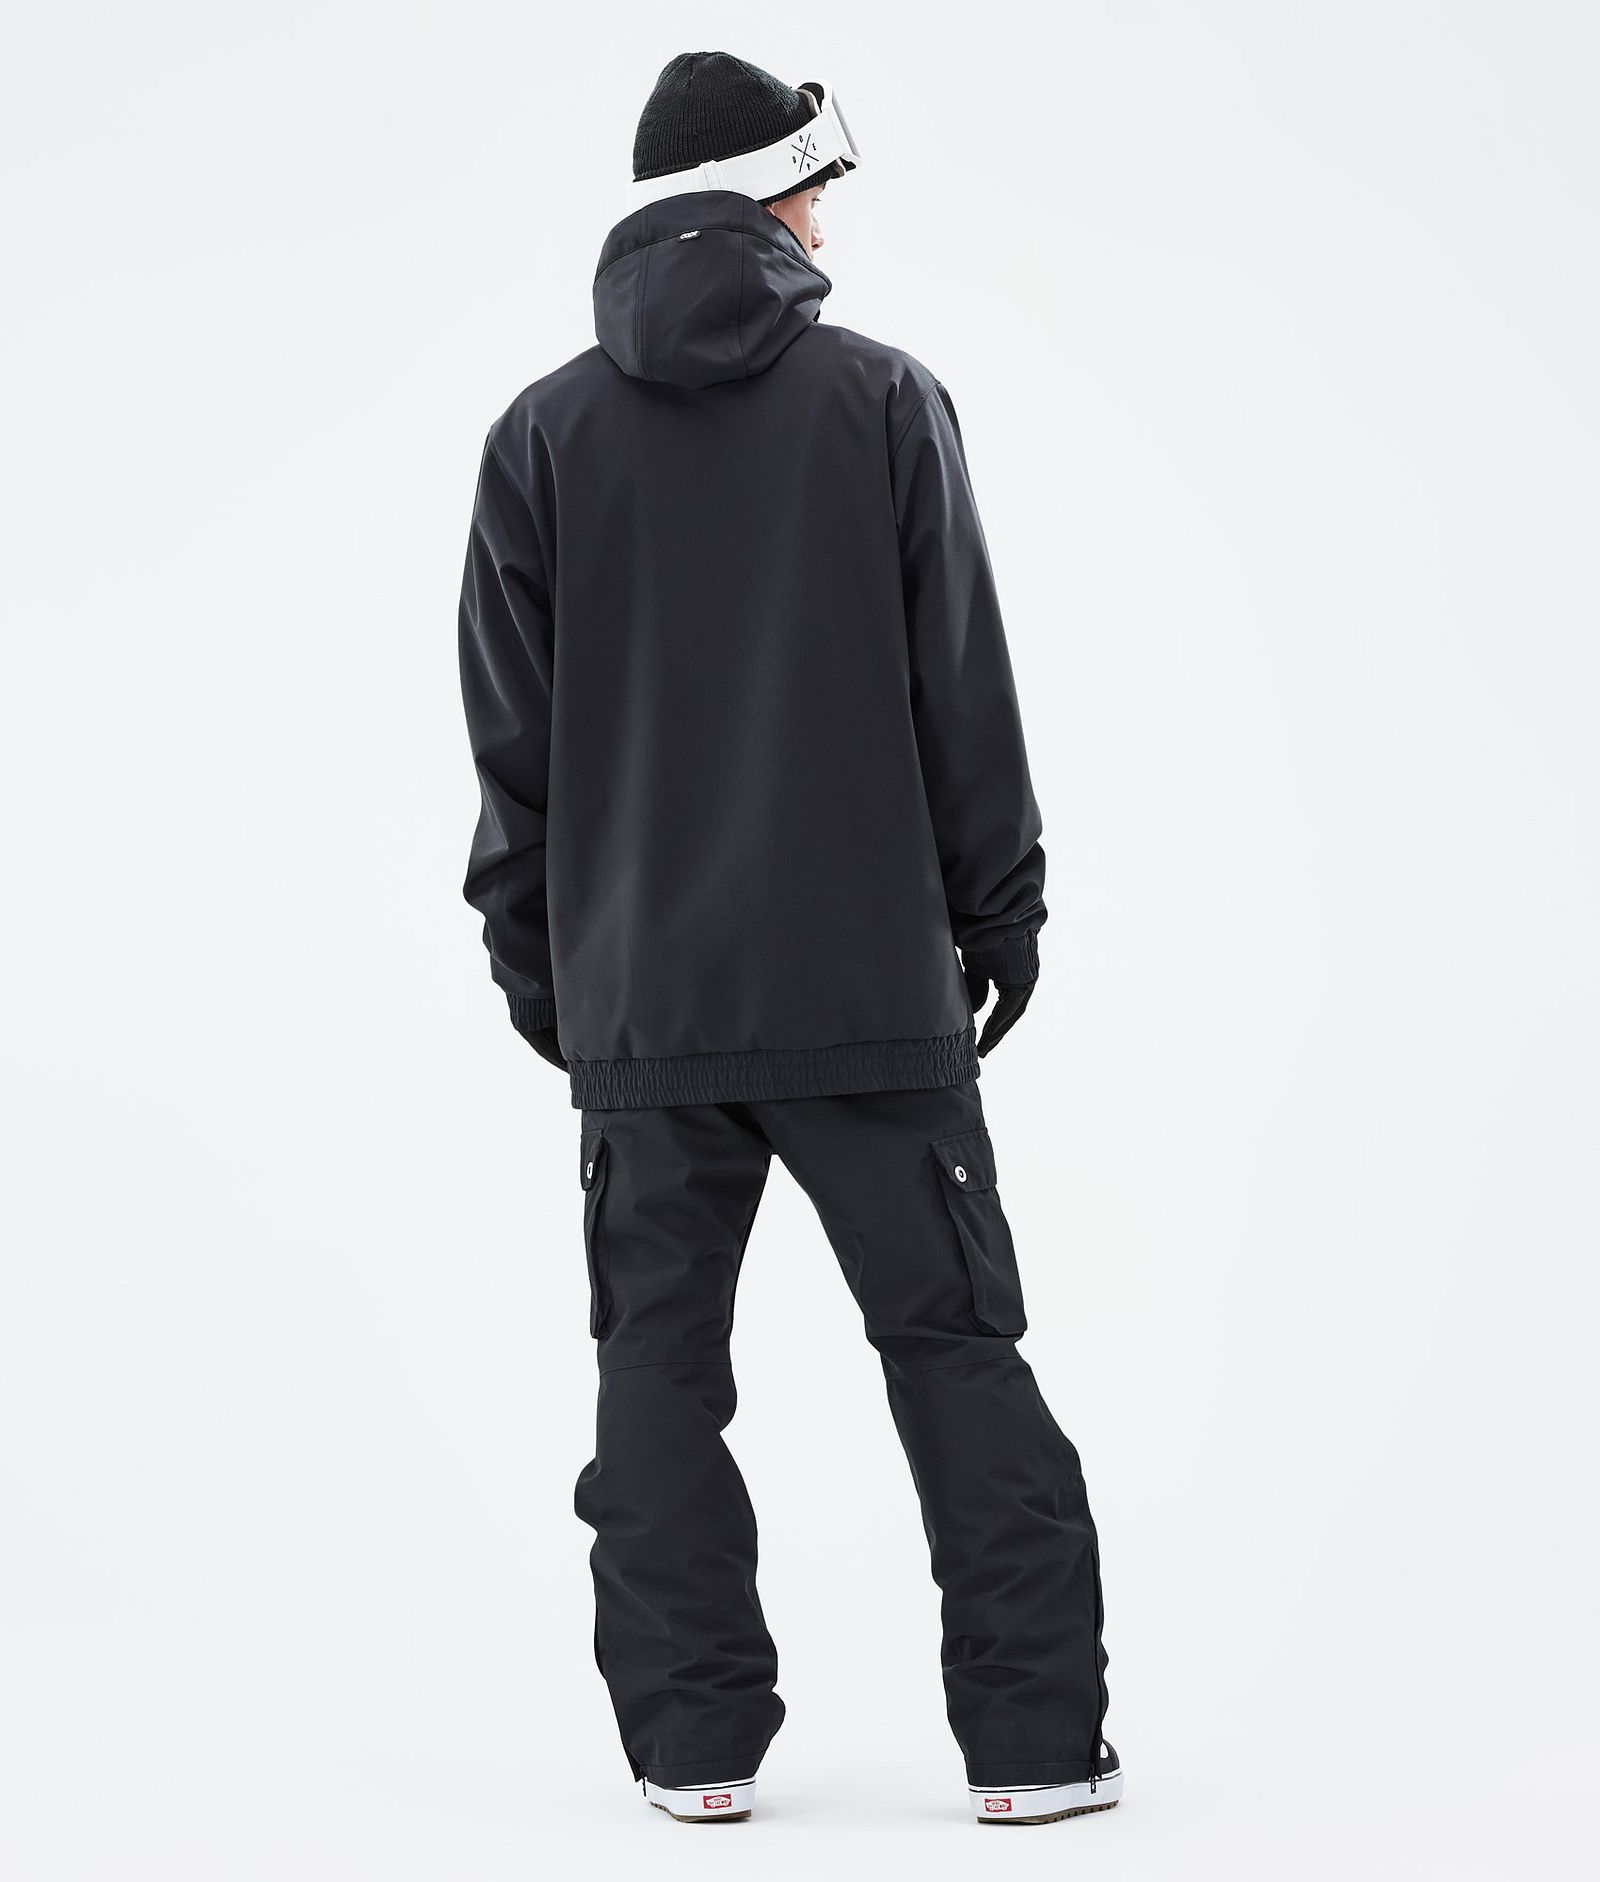 Dope Yeti Snowboard Outfit Herren Black/Black